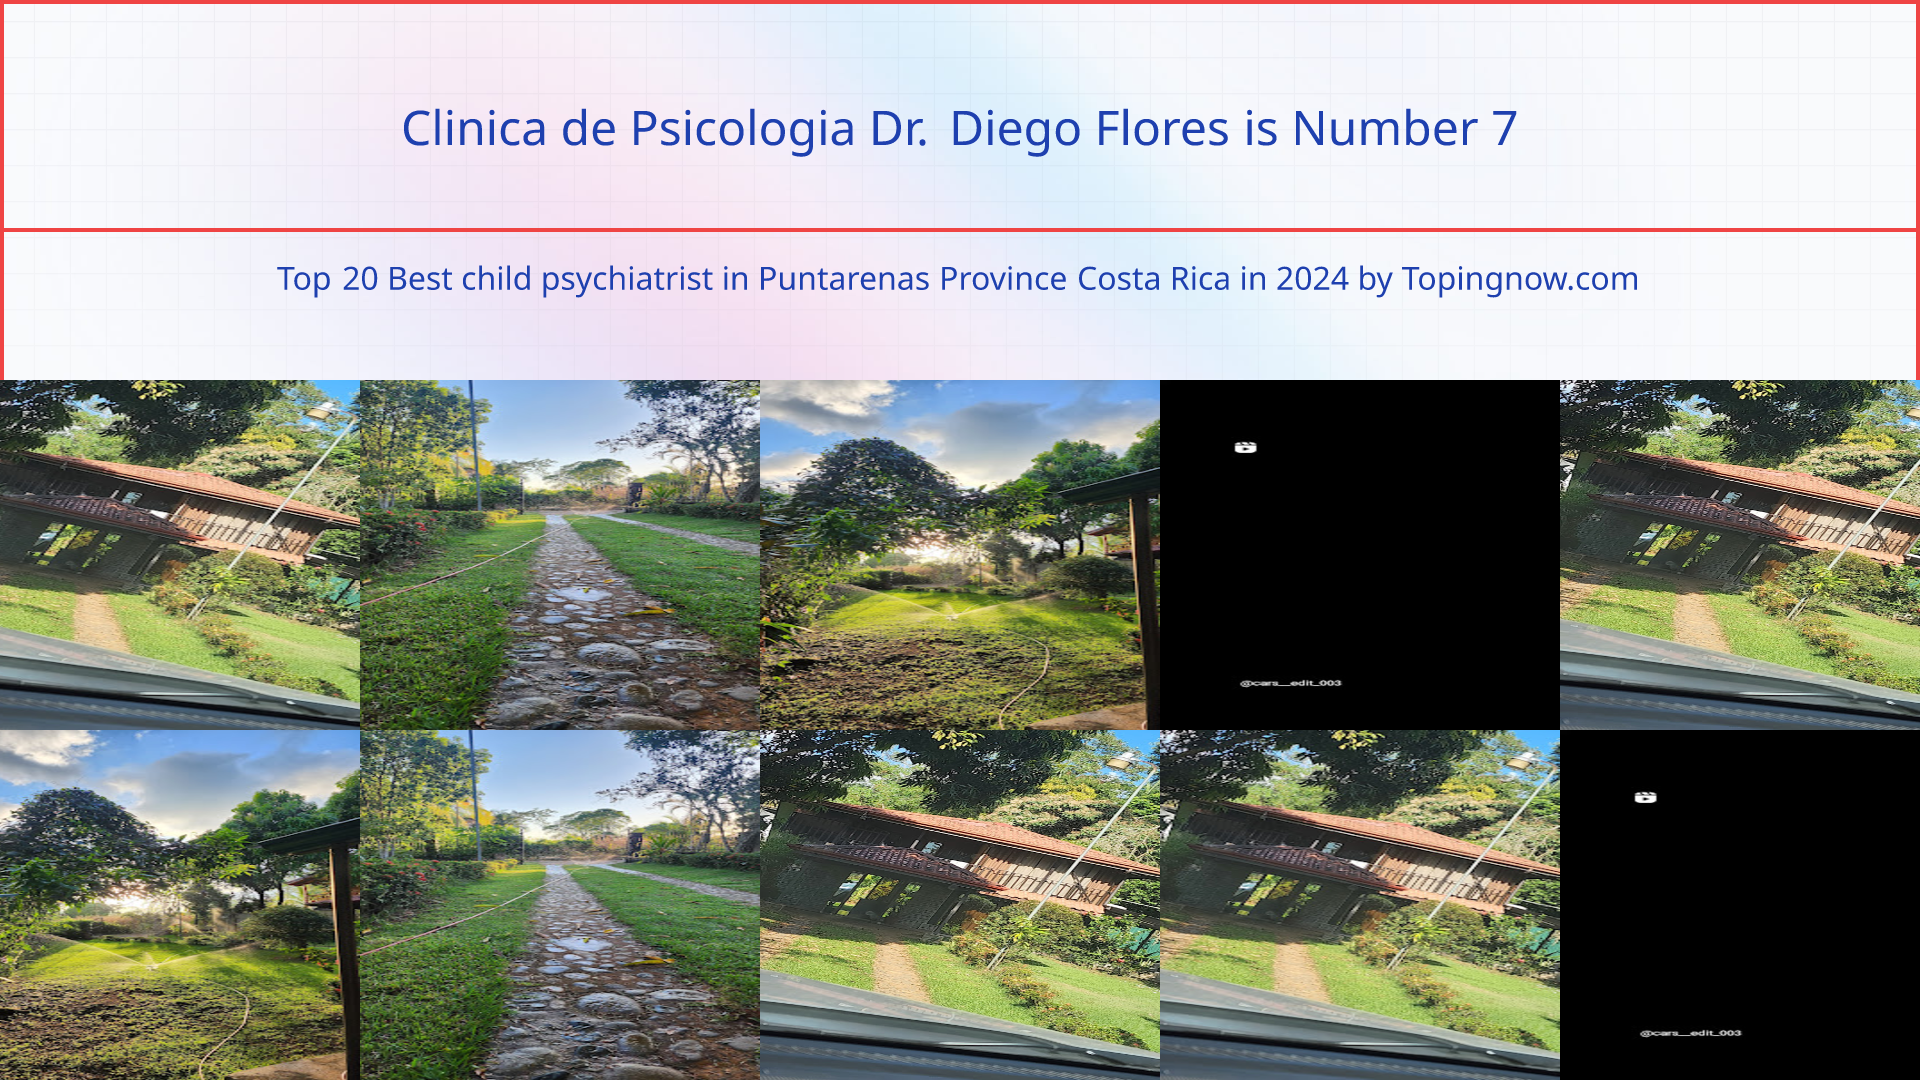 Clinica de Psicologia Dr. Diego Flores: Top 20 Best child psychiatrist in Puntarenas Province Costa Rica in 2024